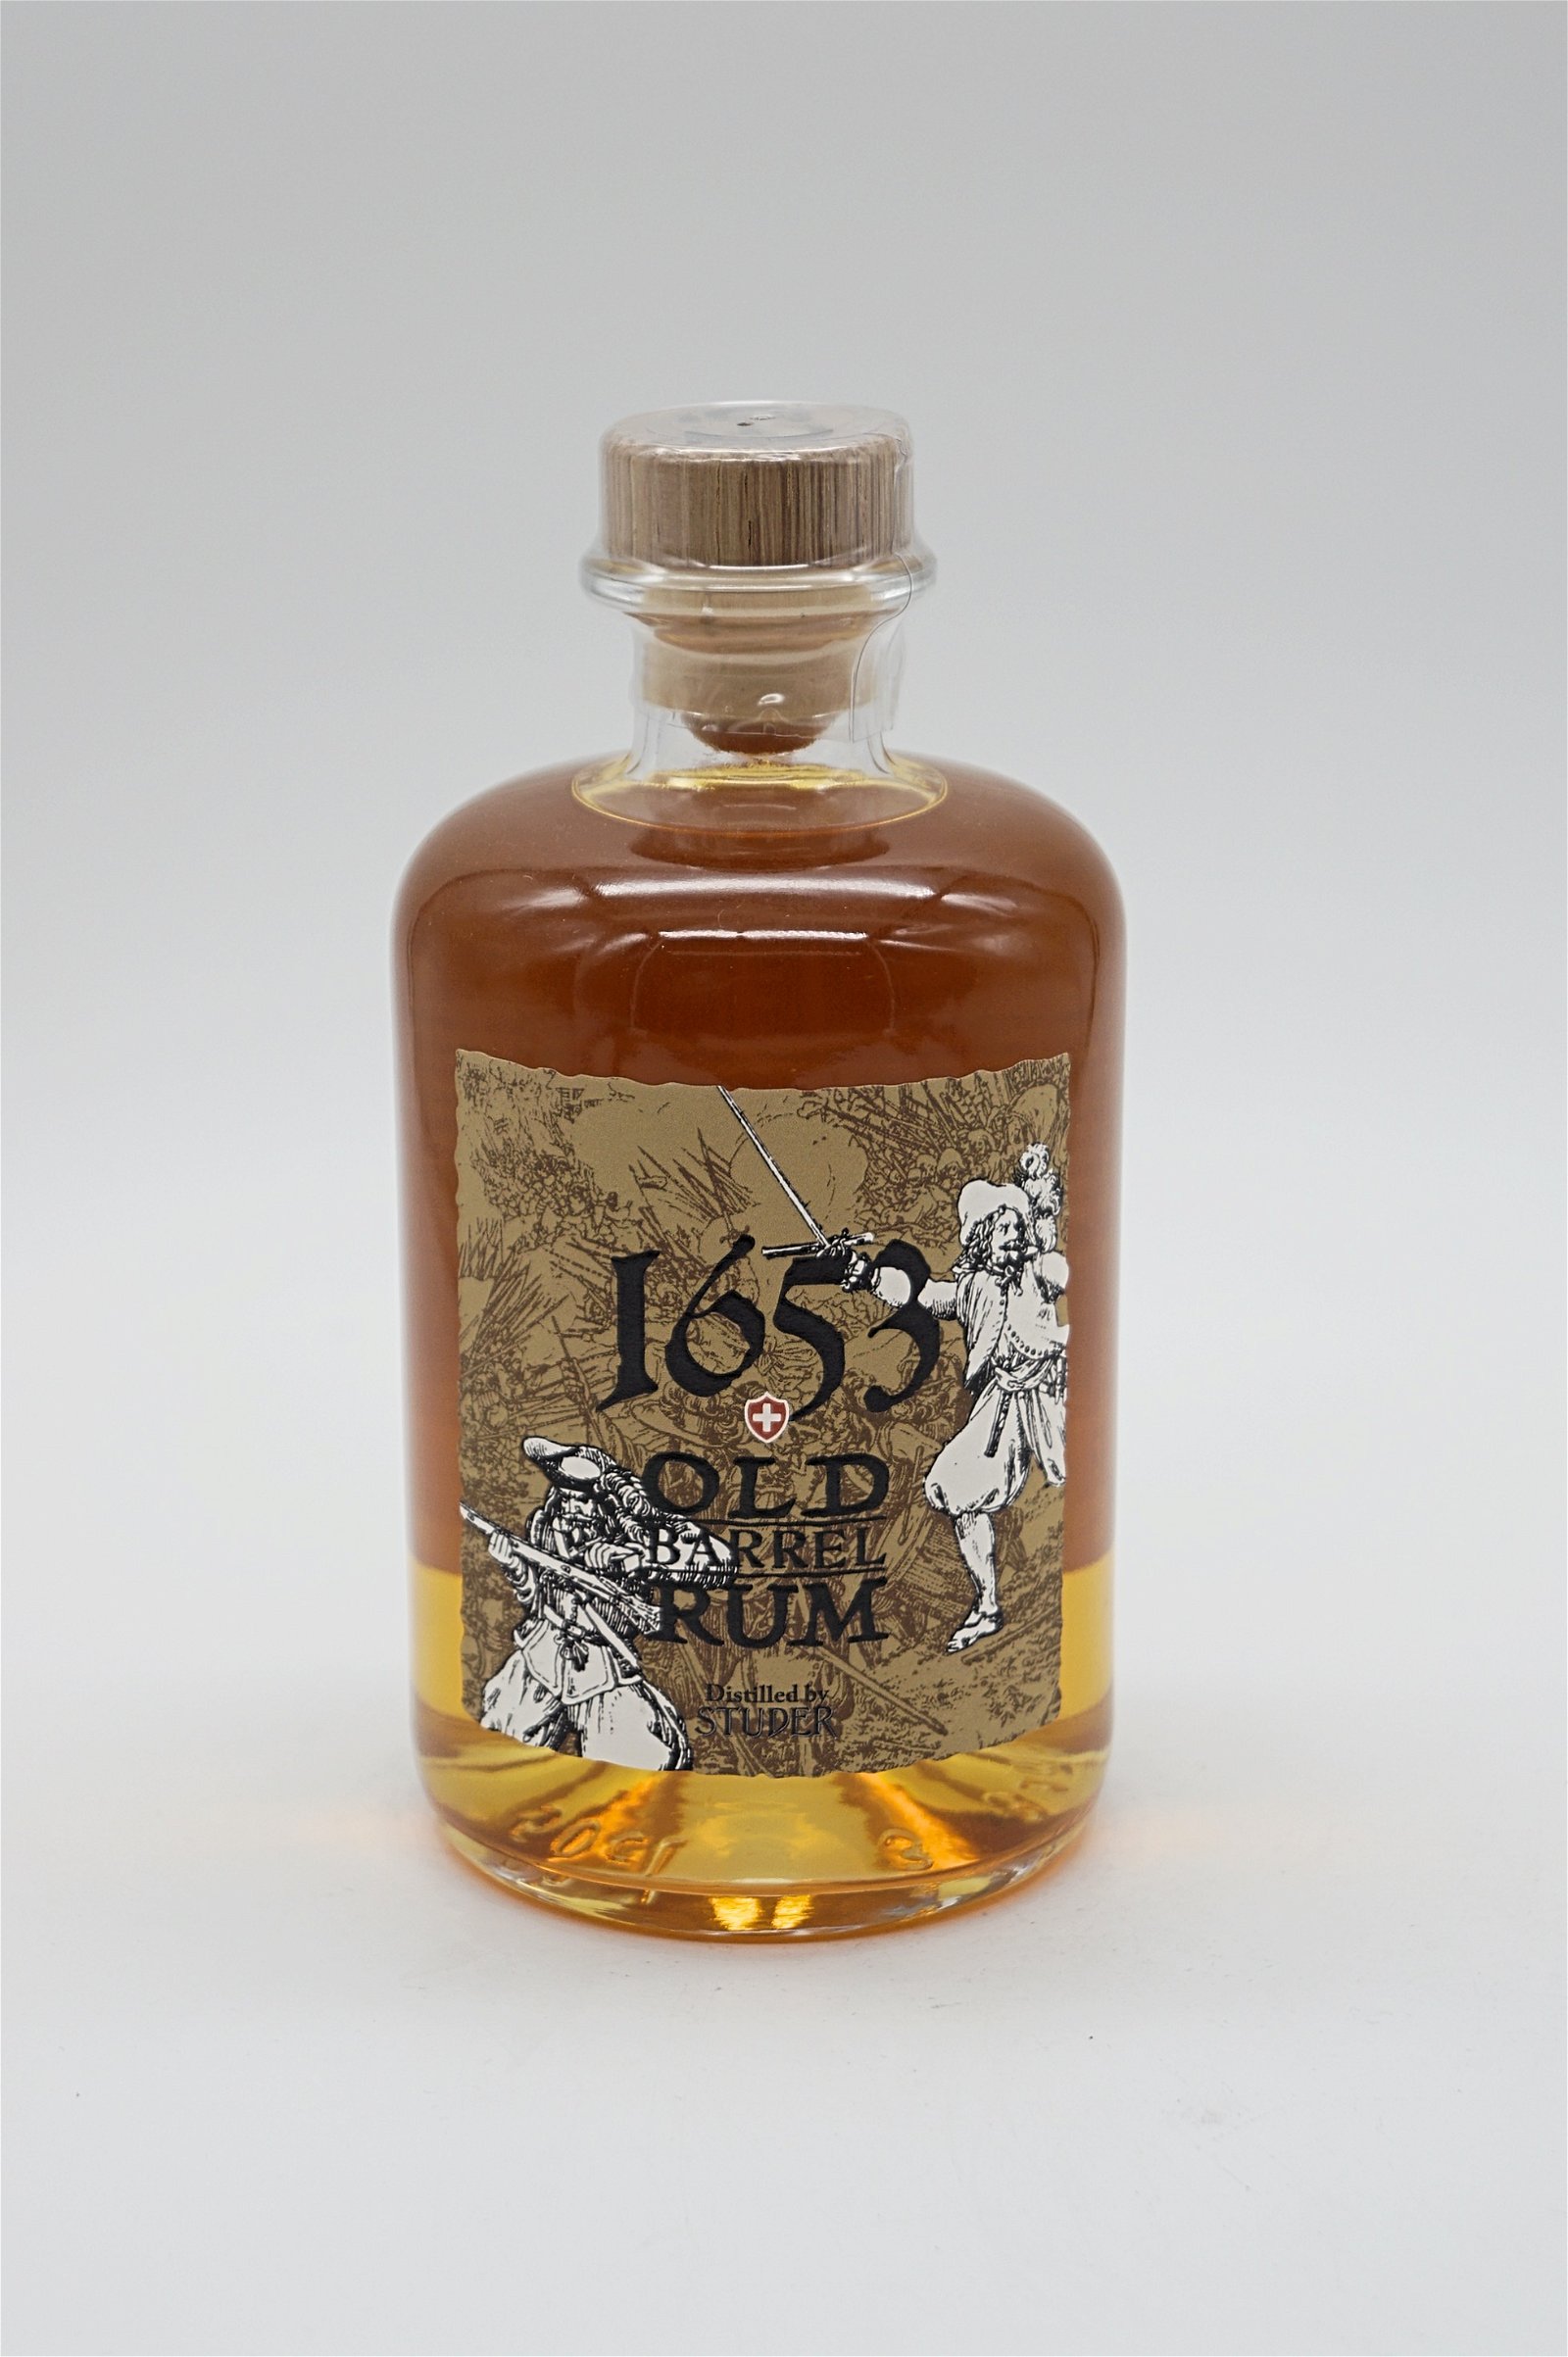 Studers 1653 Old Barrel Rum